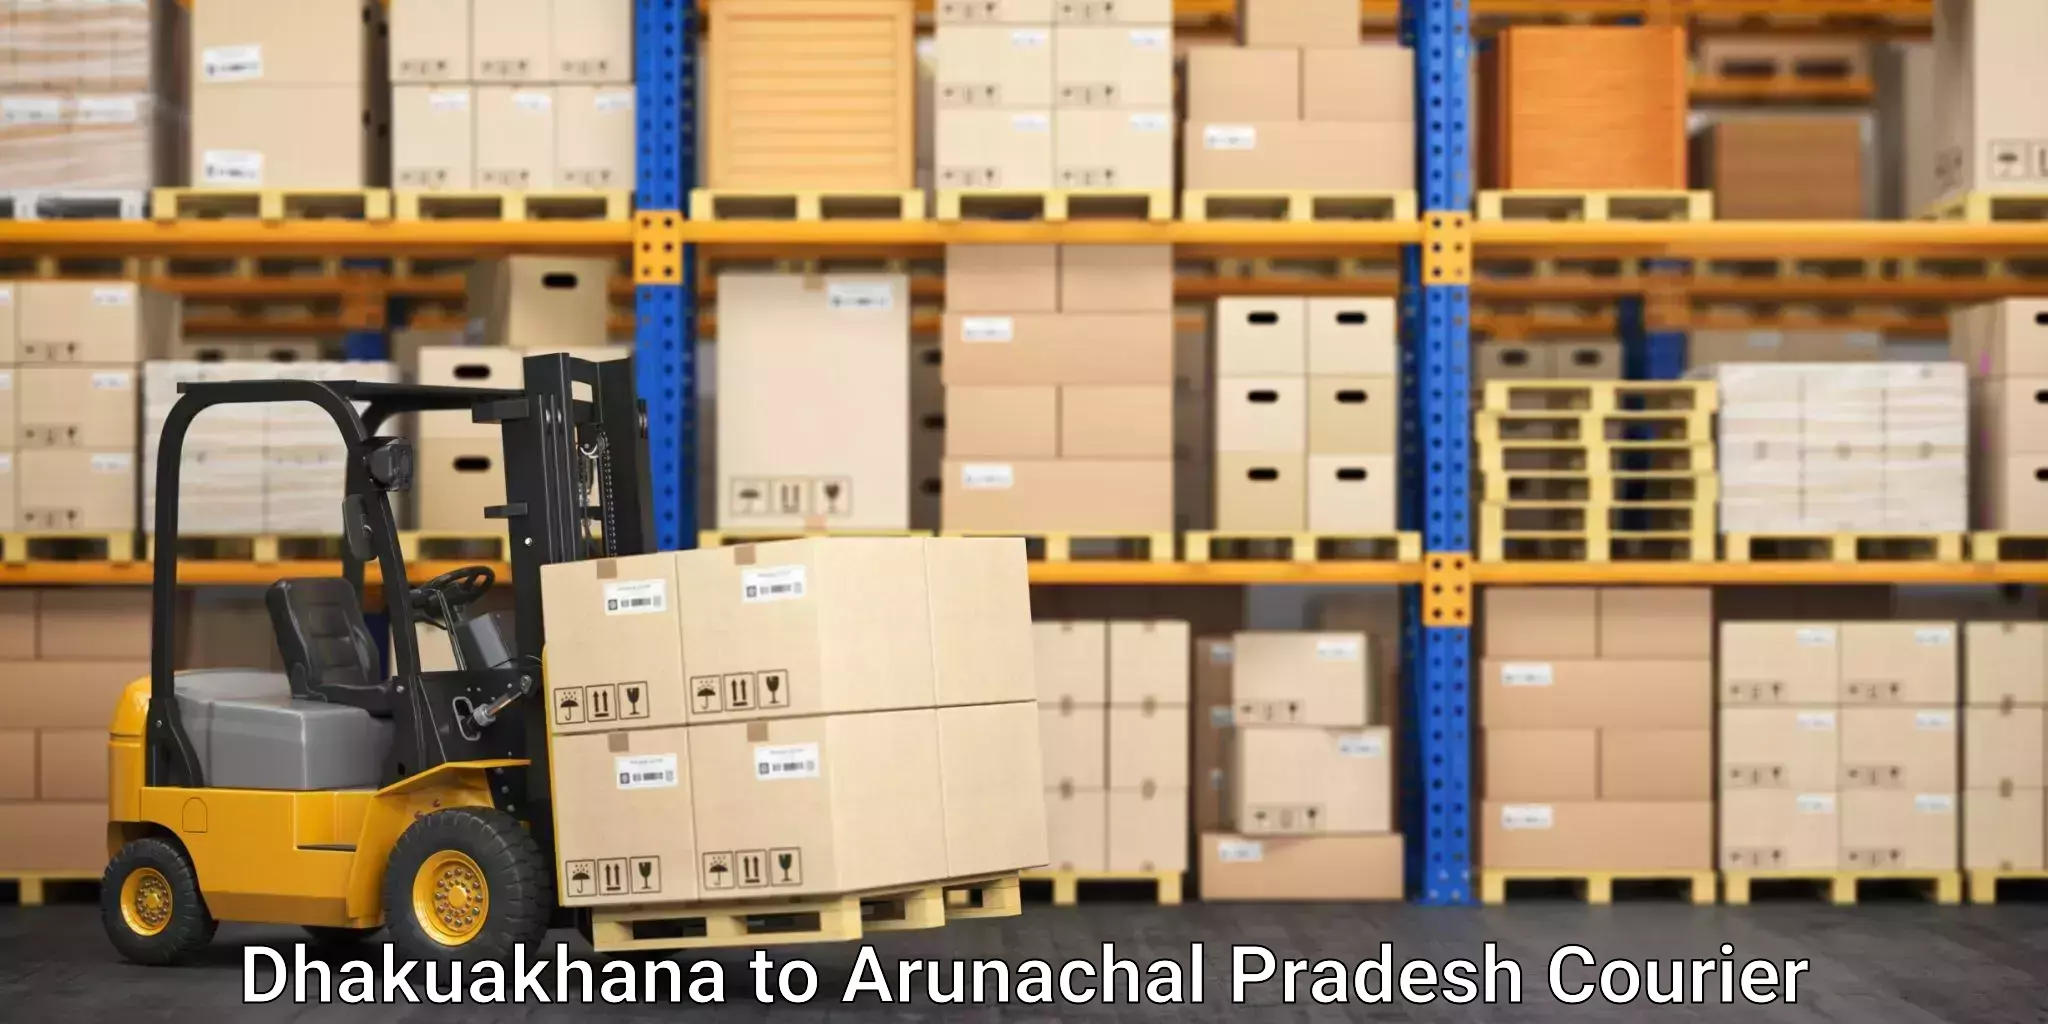 Courier service partnerships Dhakuakhana to Arunachal Pradesh